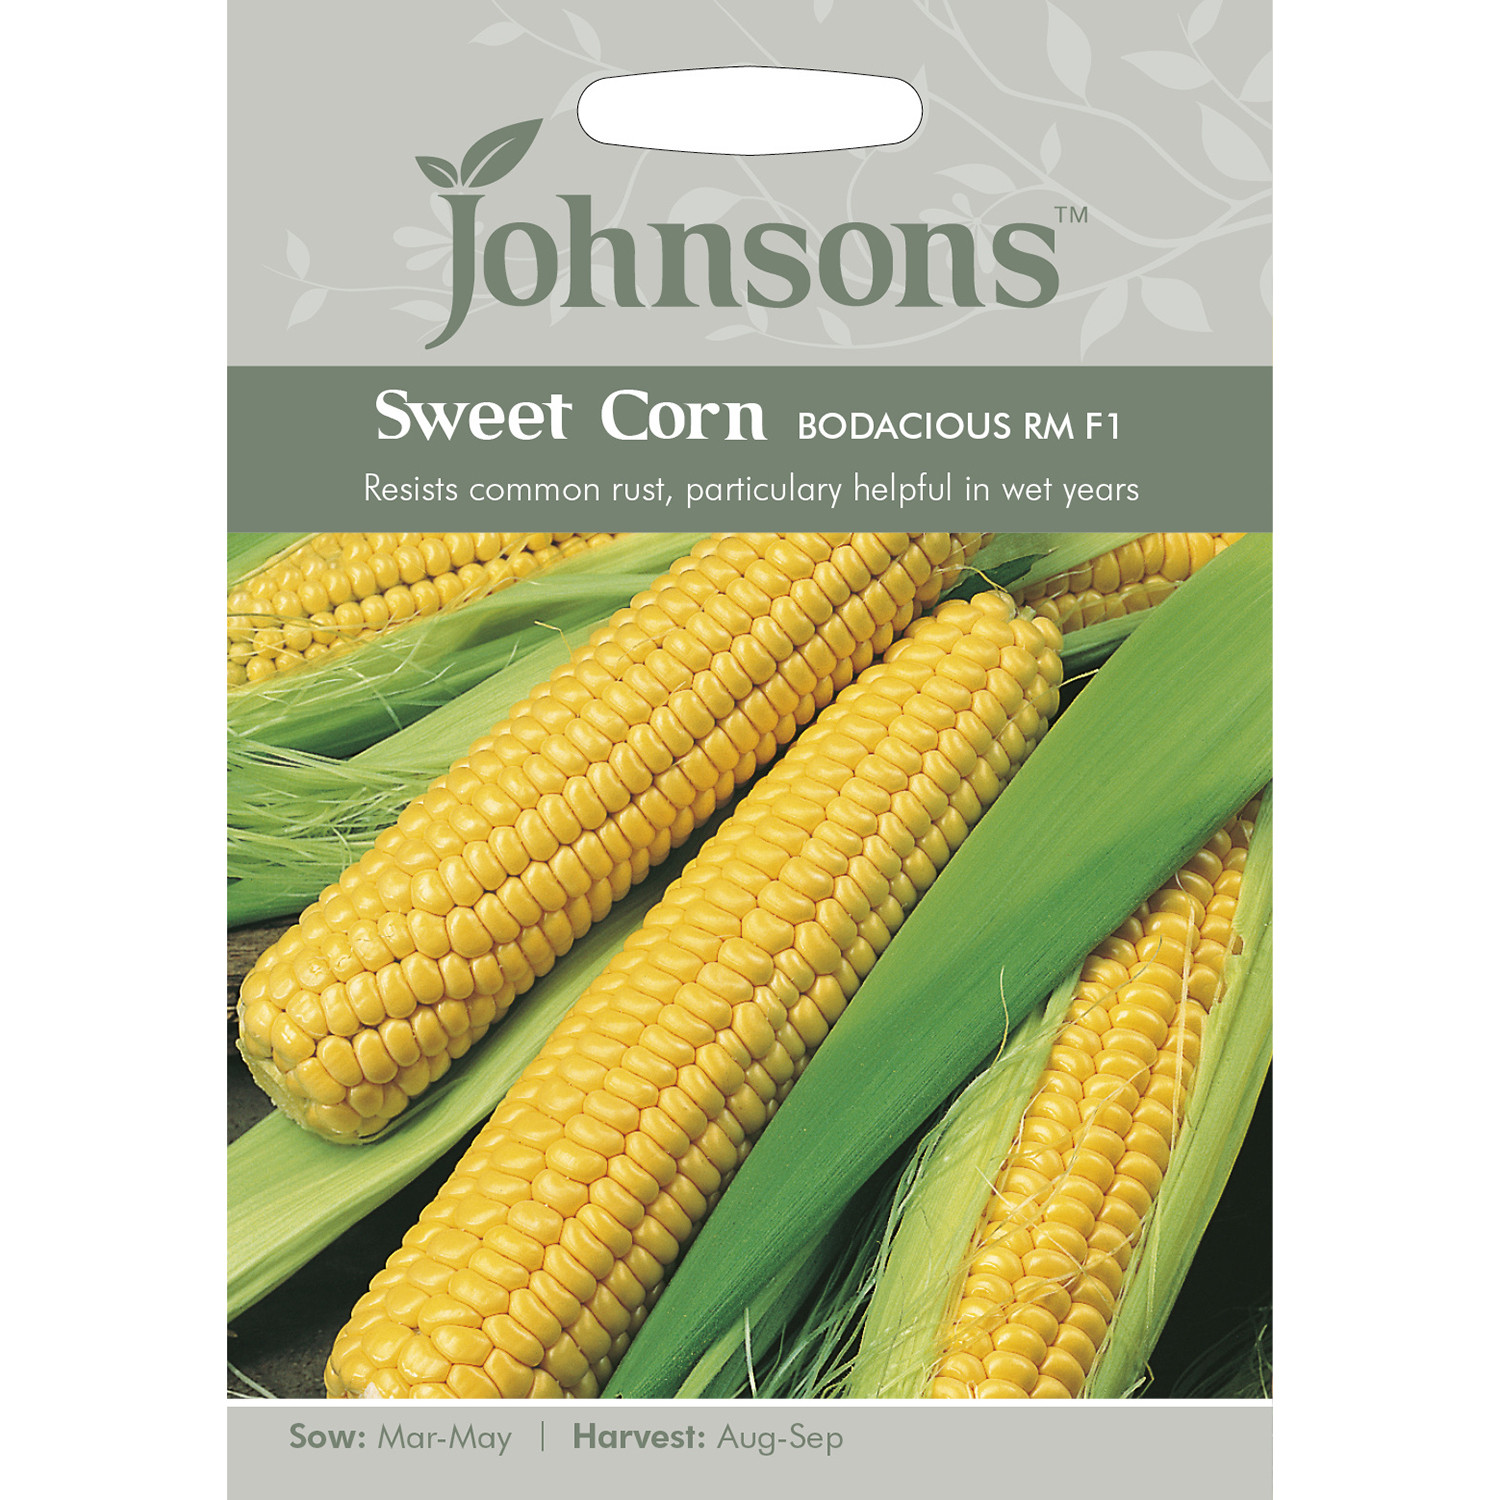 Johnsons Bodacious RM F1 Sweet Corn Seeds Image 2